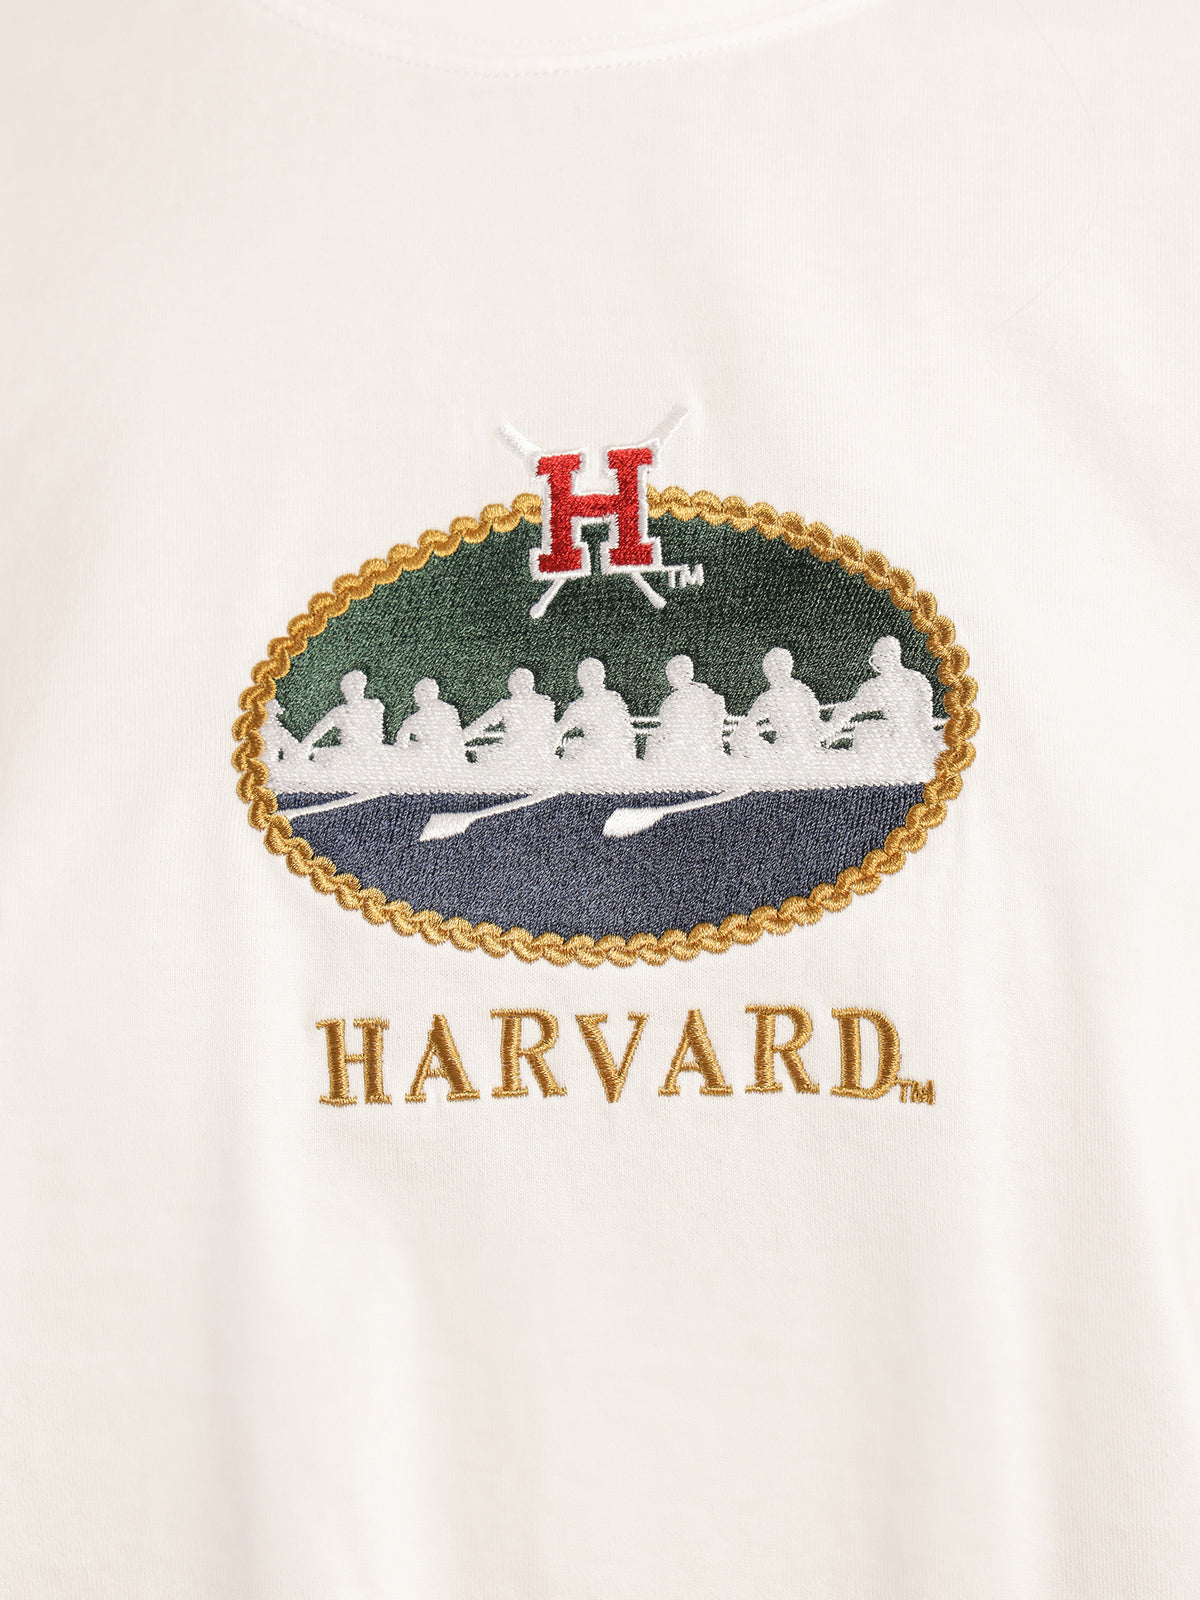 Harvard Rowing Crest Crop T-Shirt in White